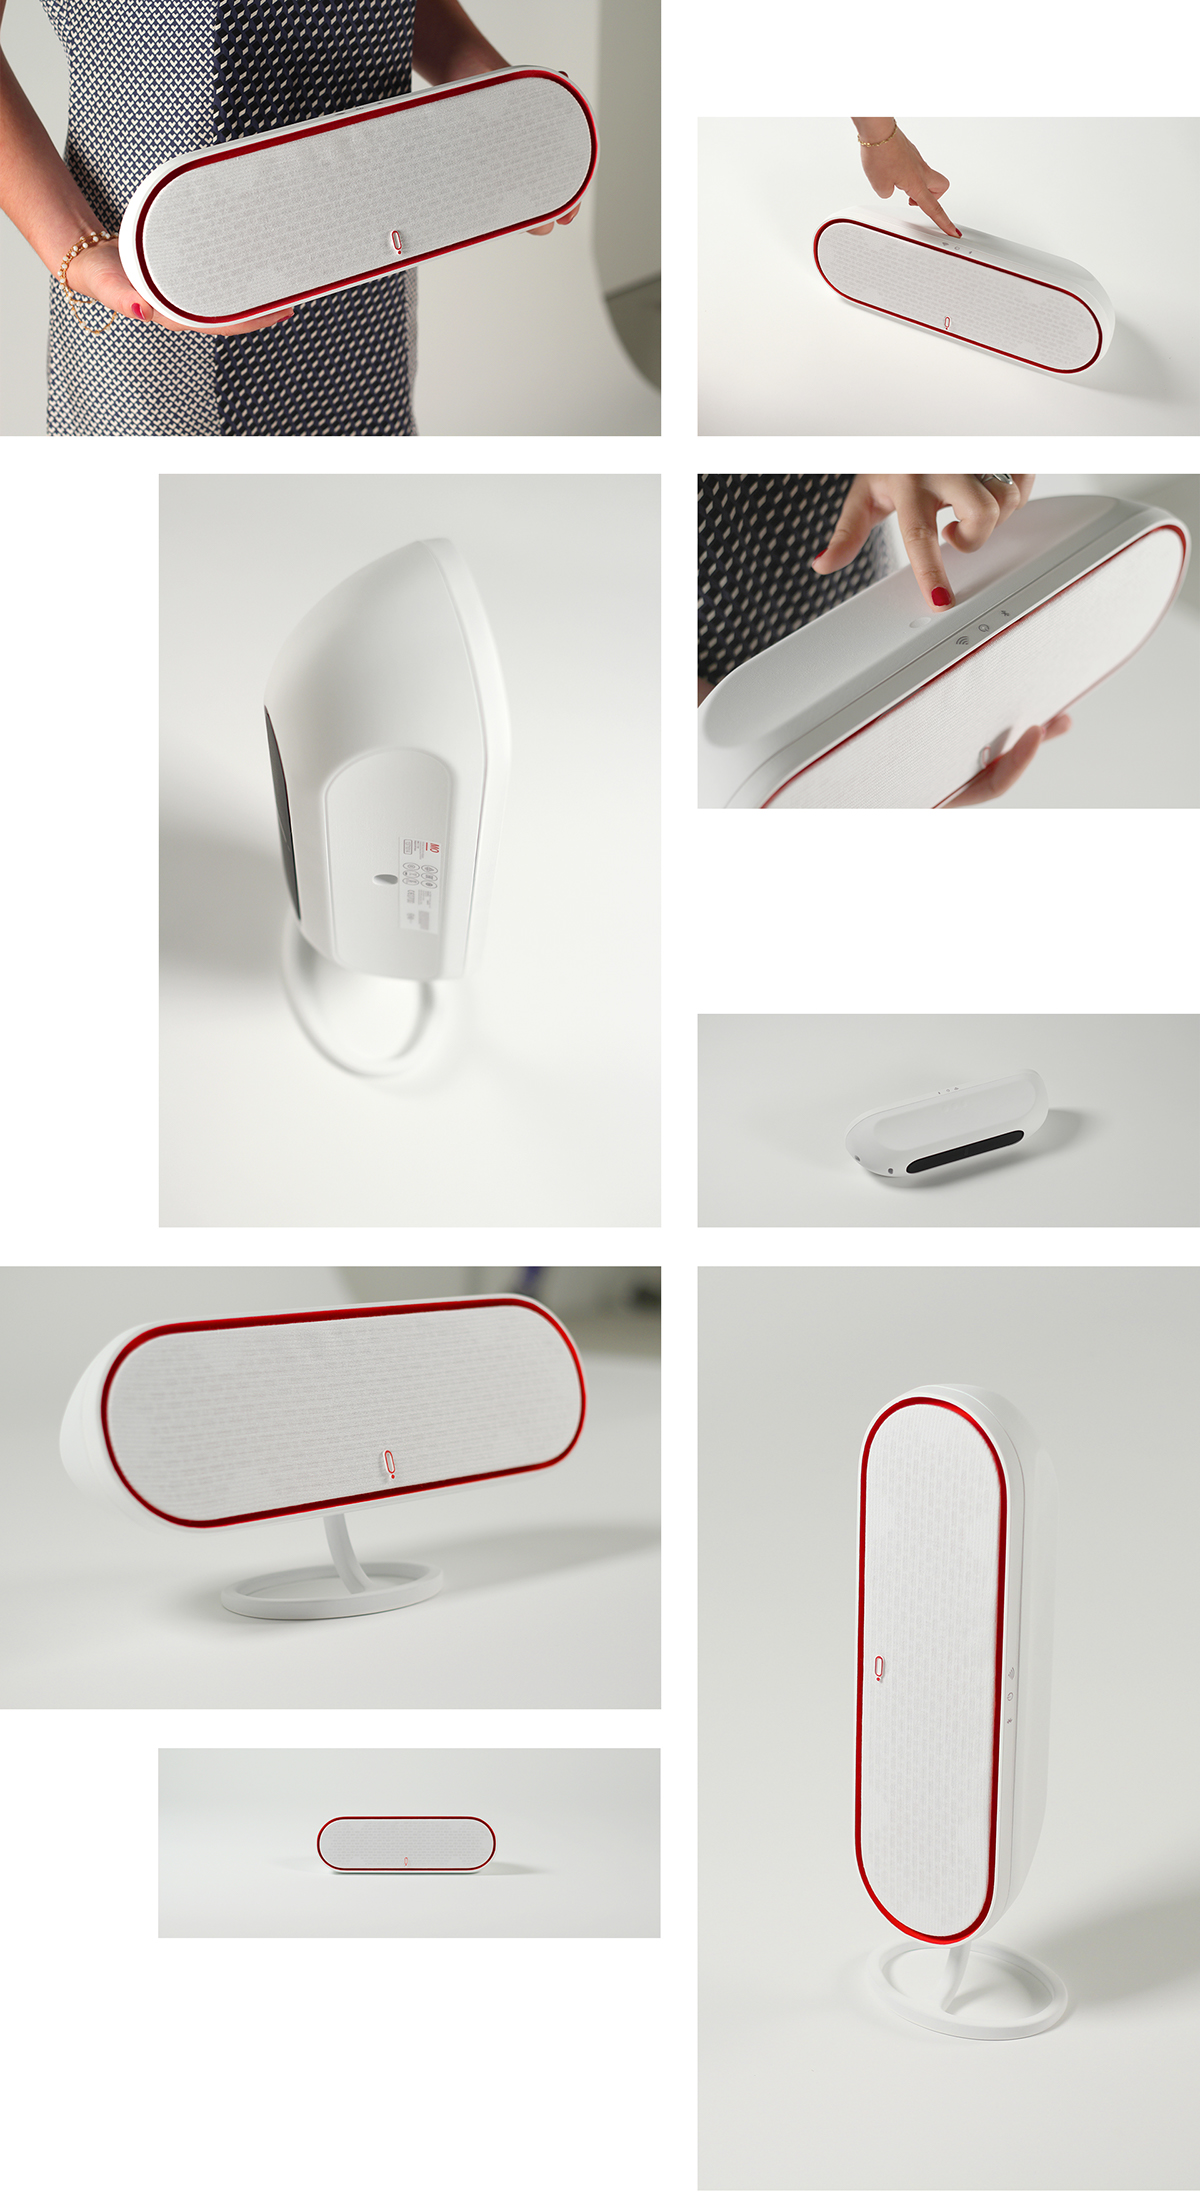 design speaker sound jbl home wireless bluetooth integrated social Audio Harman sober curve details Minimalism